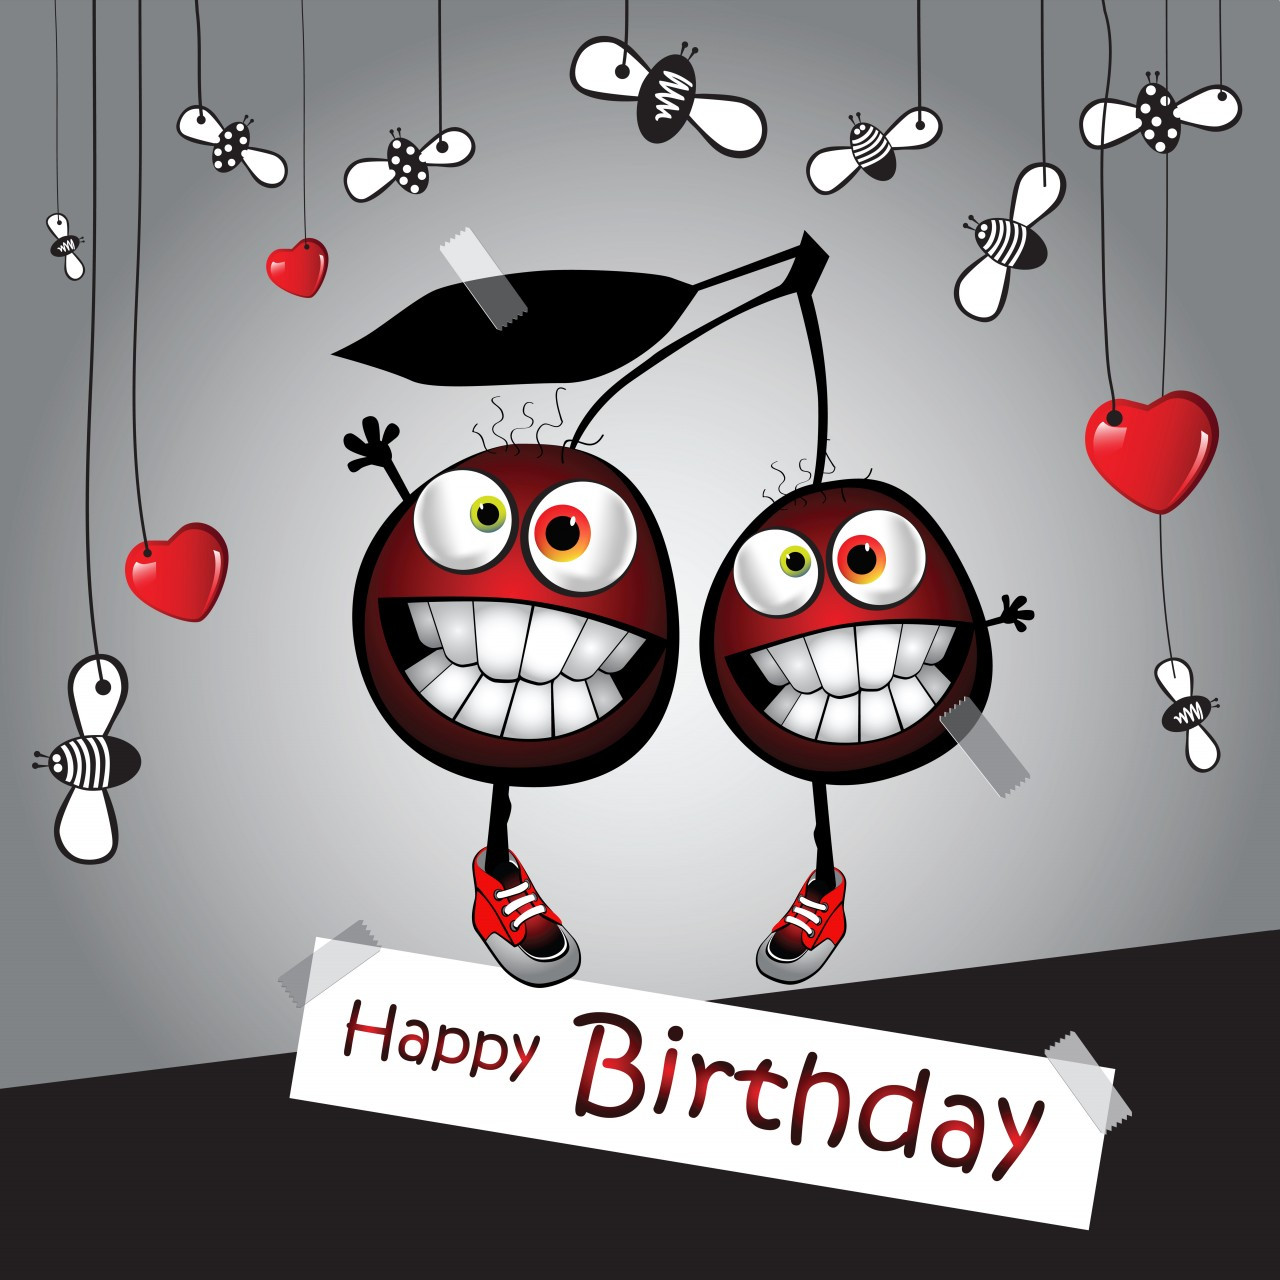 Free Animated Funny Birthday Cards
 Funny Happy Birthday Cartoon • Elsoar